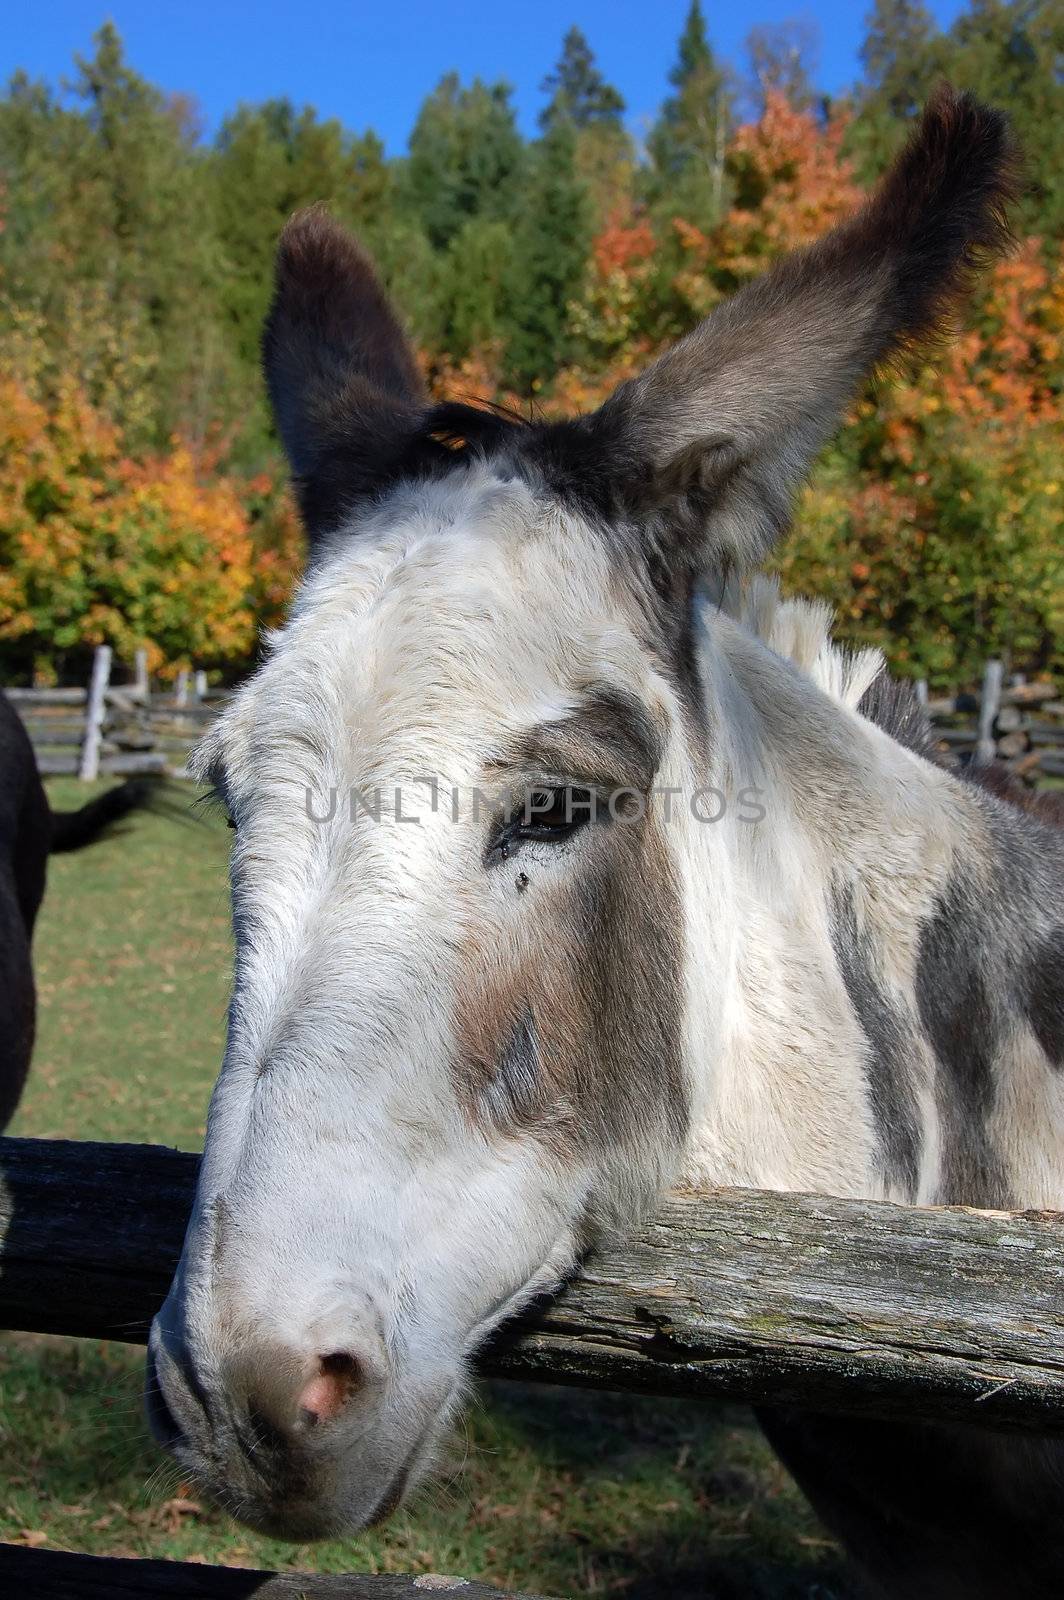 Donkey by nialat